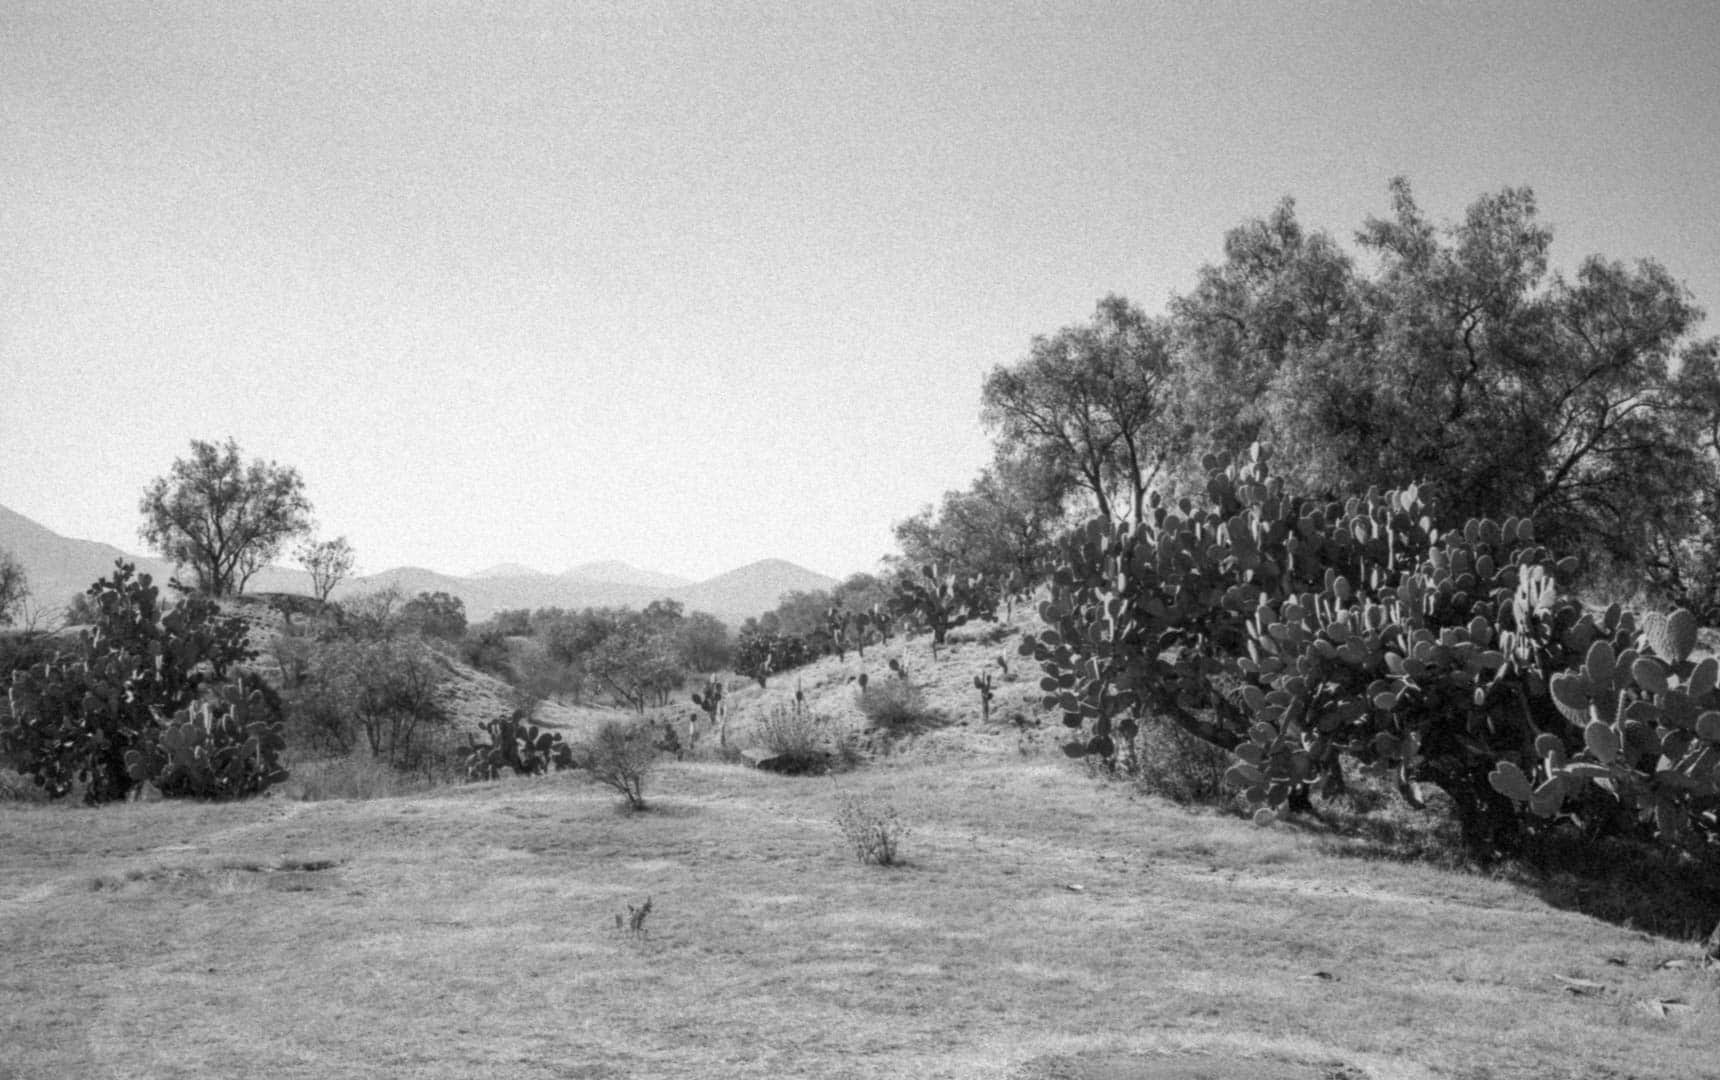 A desert landscape with many cacti